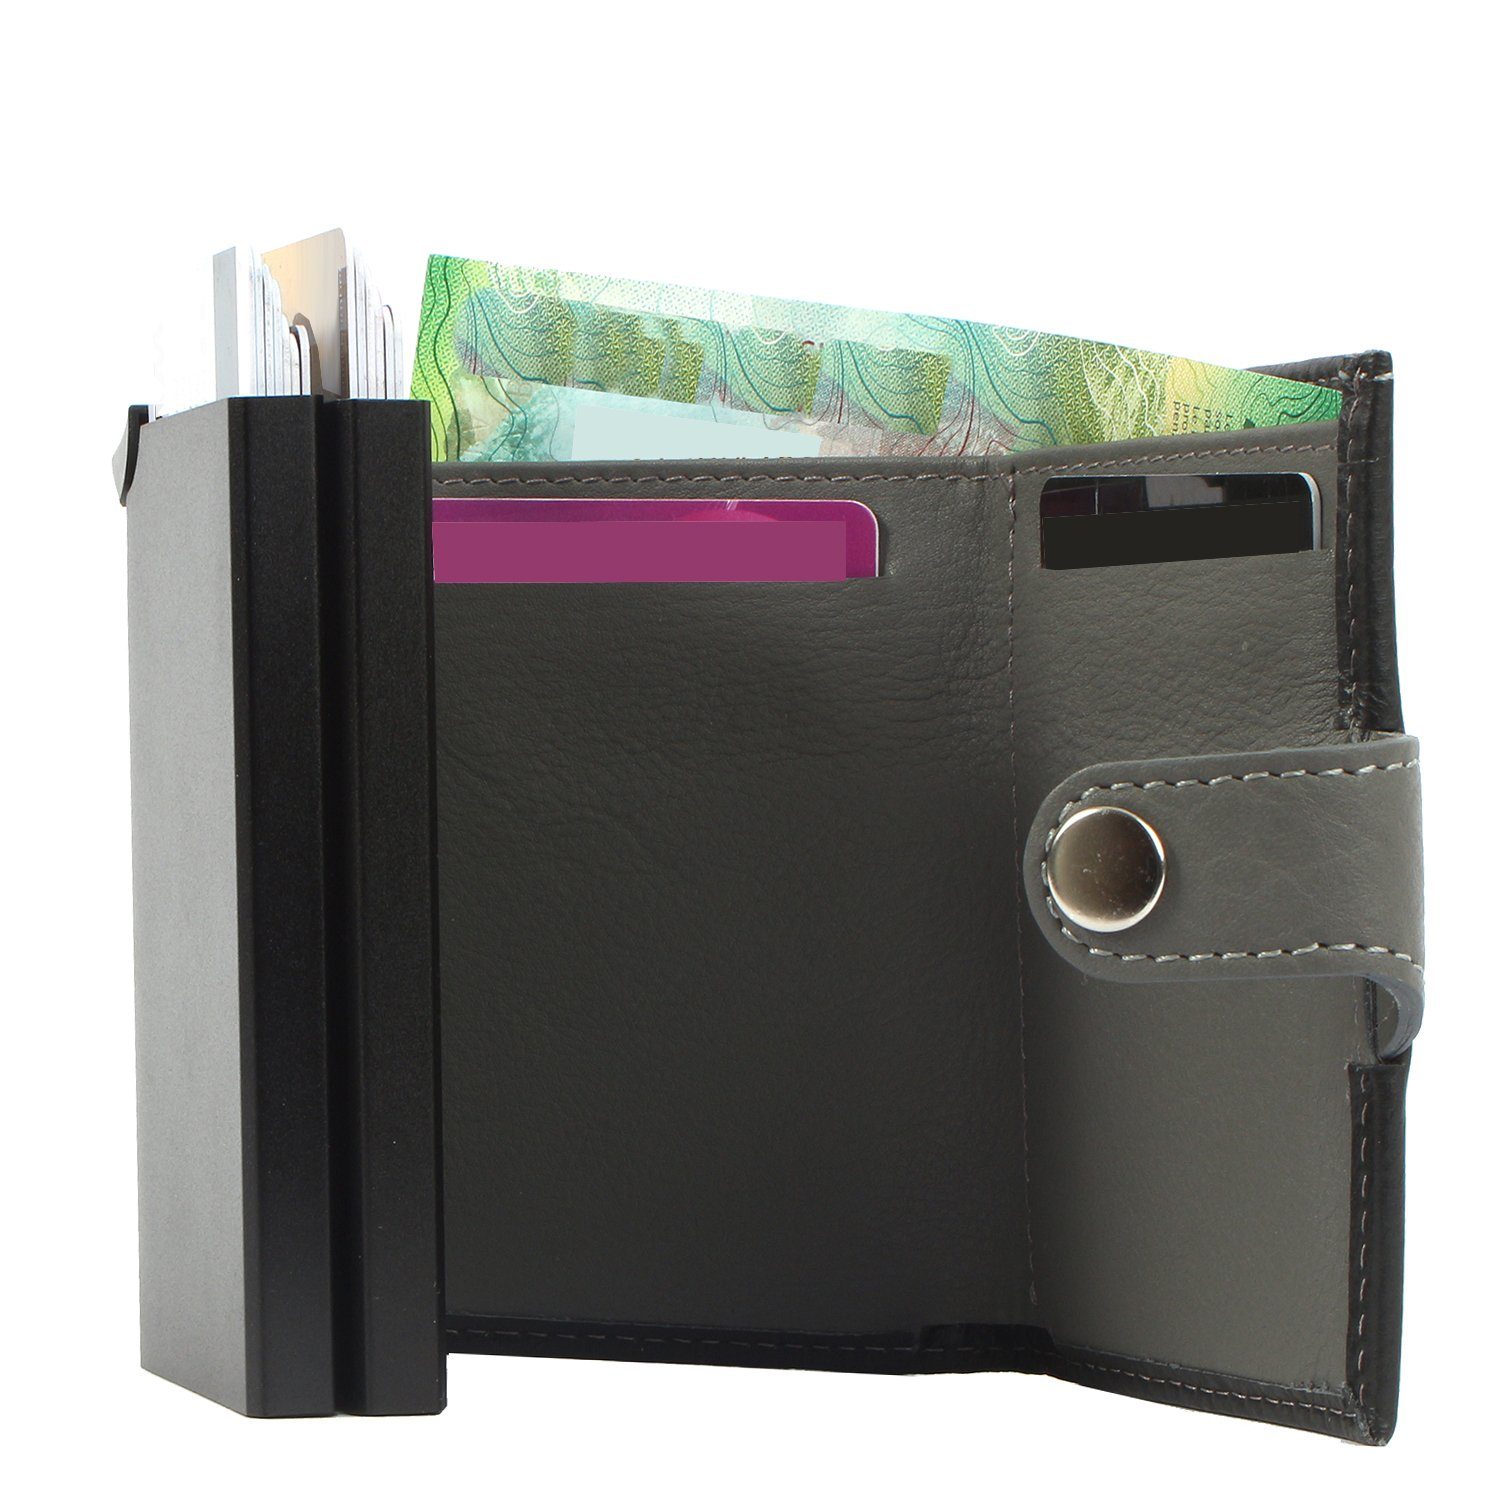 Margelisch Mini Geldbörse aus Leder Upcycling RFID noonyu black double leather, Kreditkartenbörse